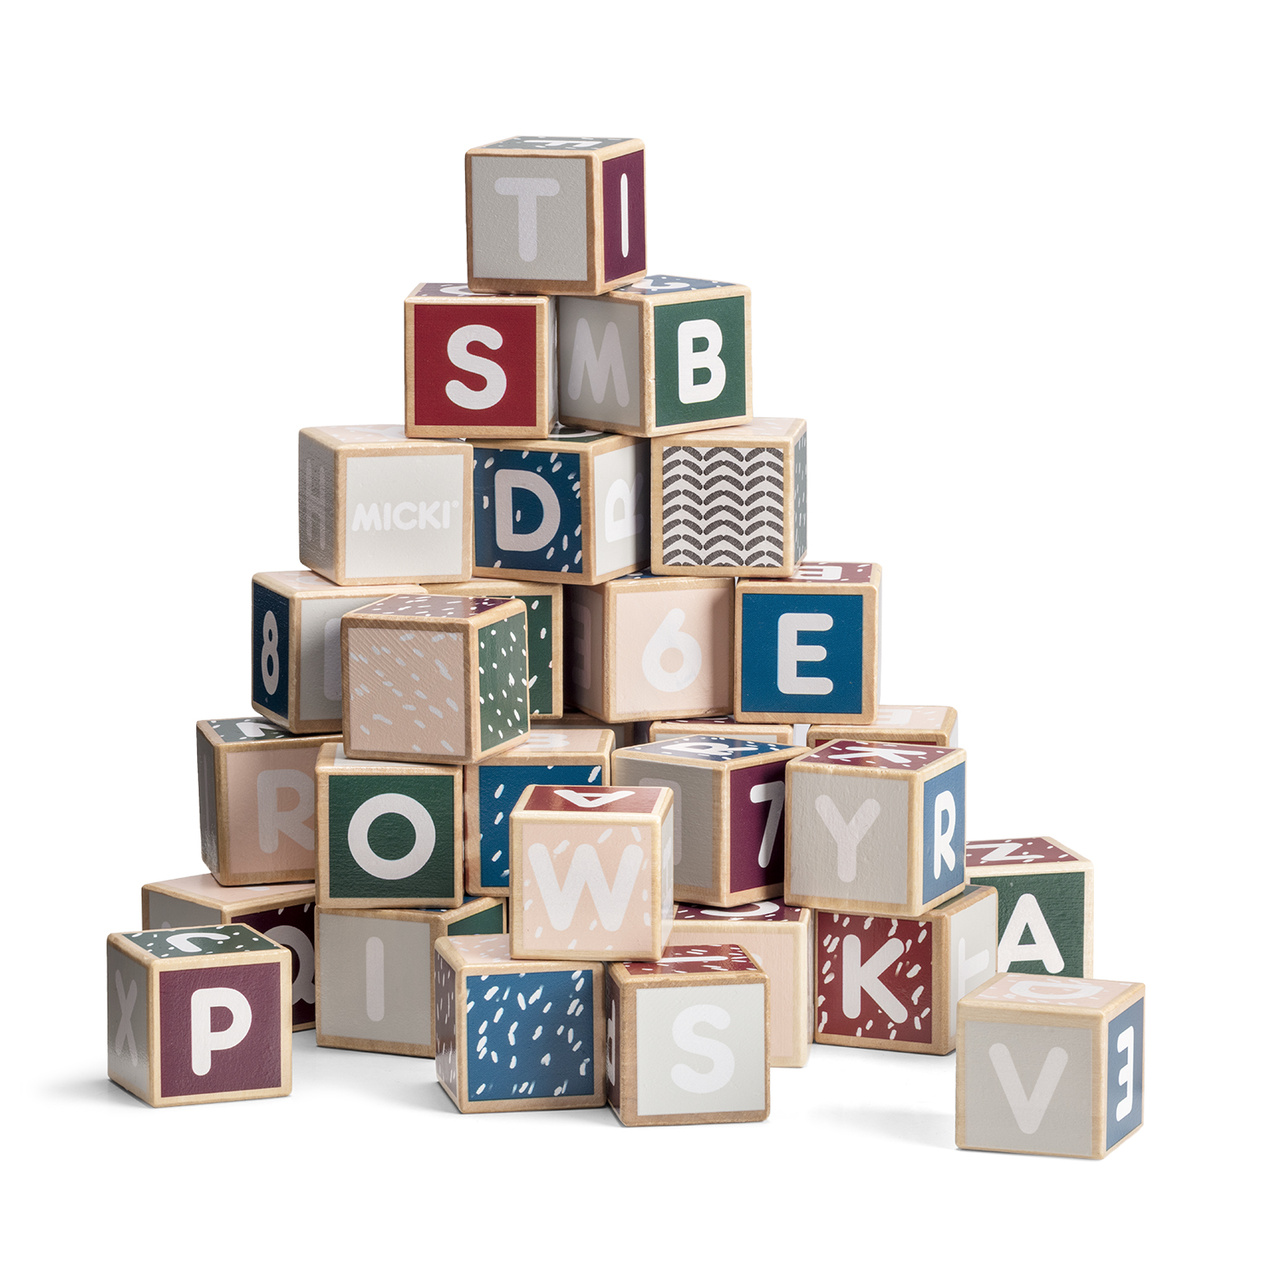 Baby toys micki decorative letter blocks 36 pieces